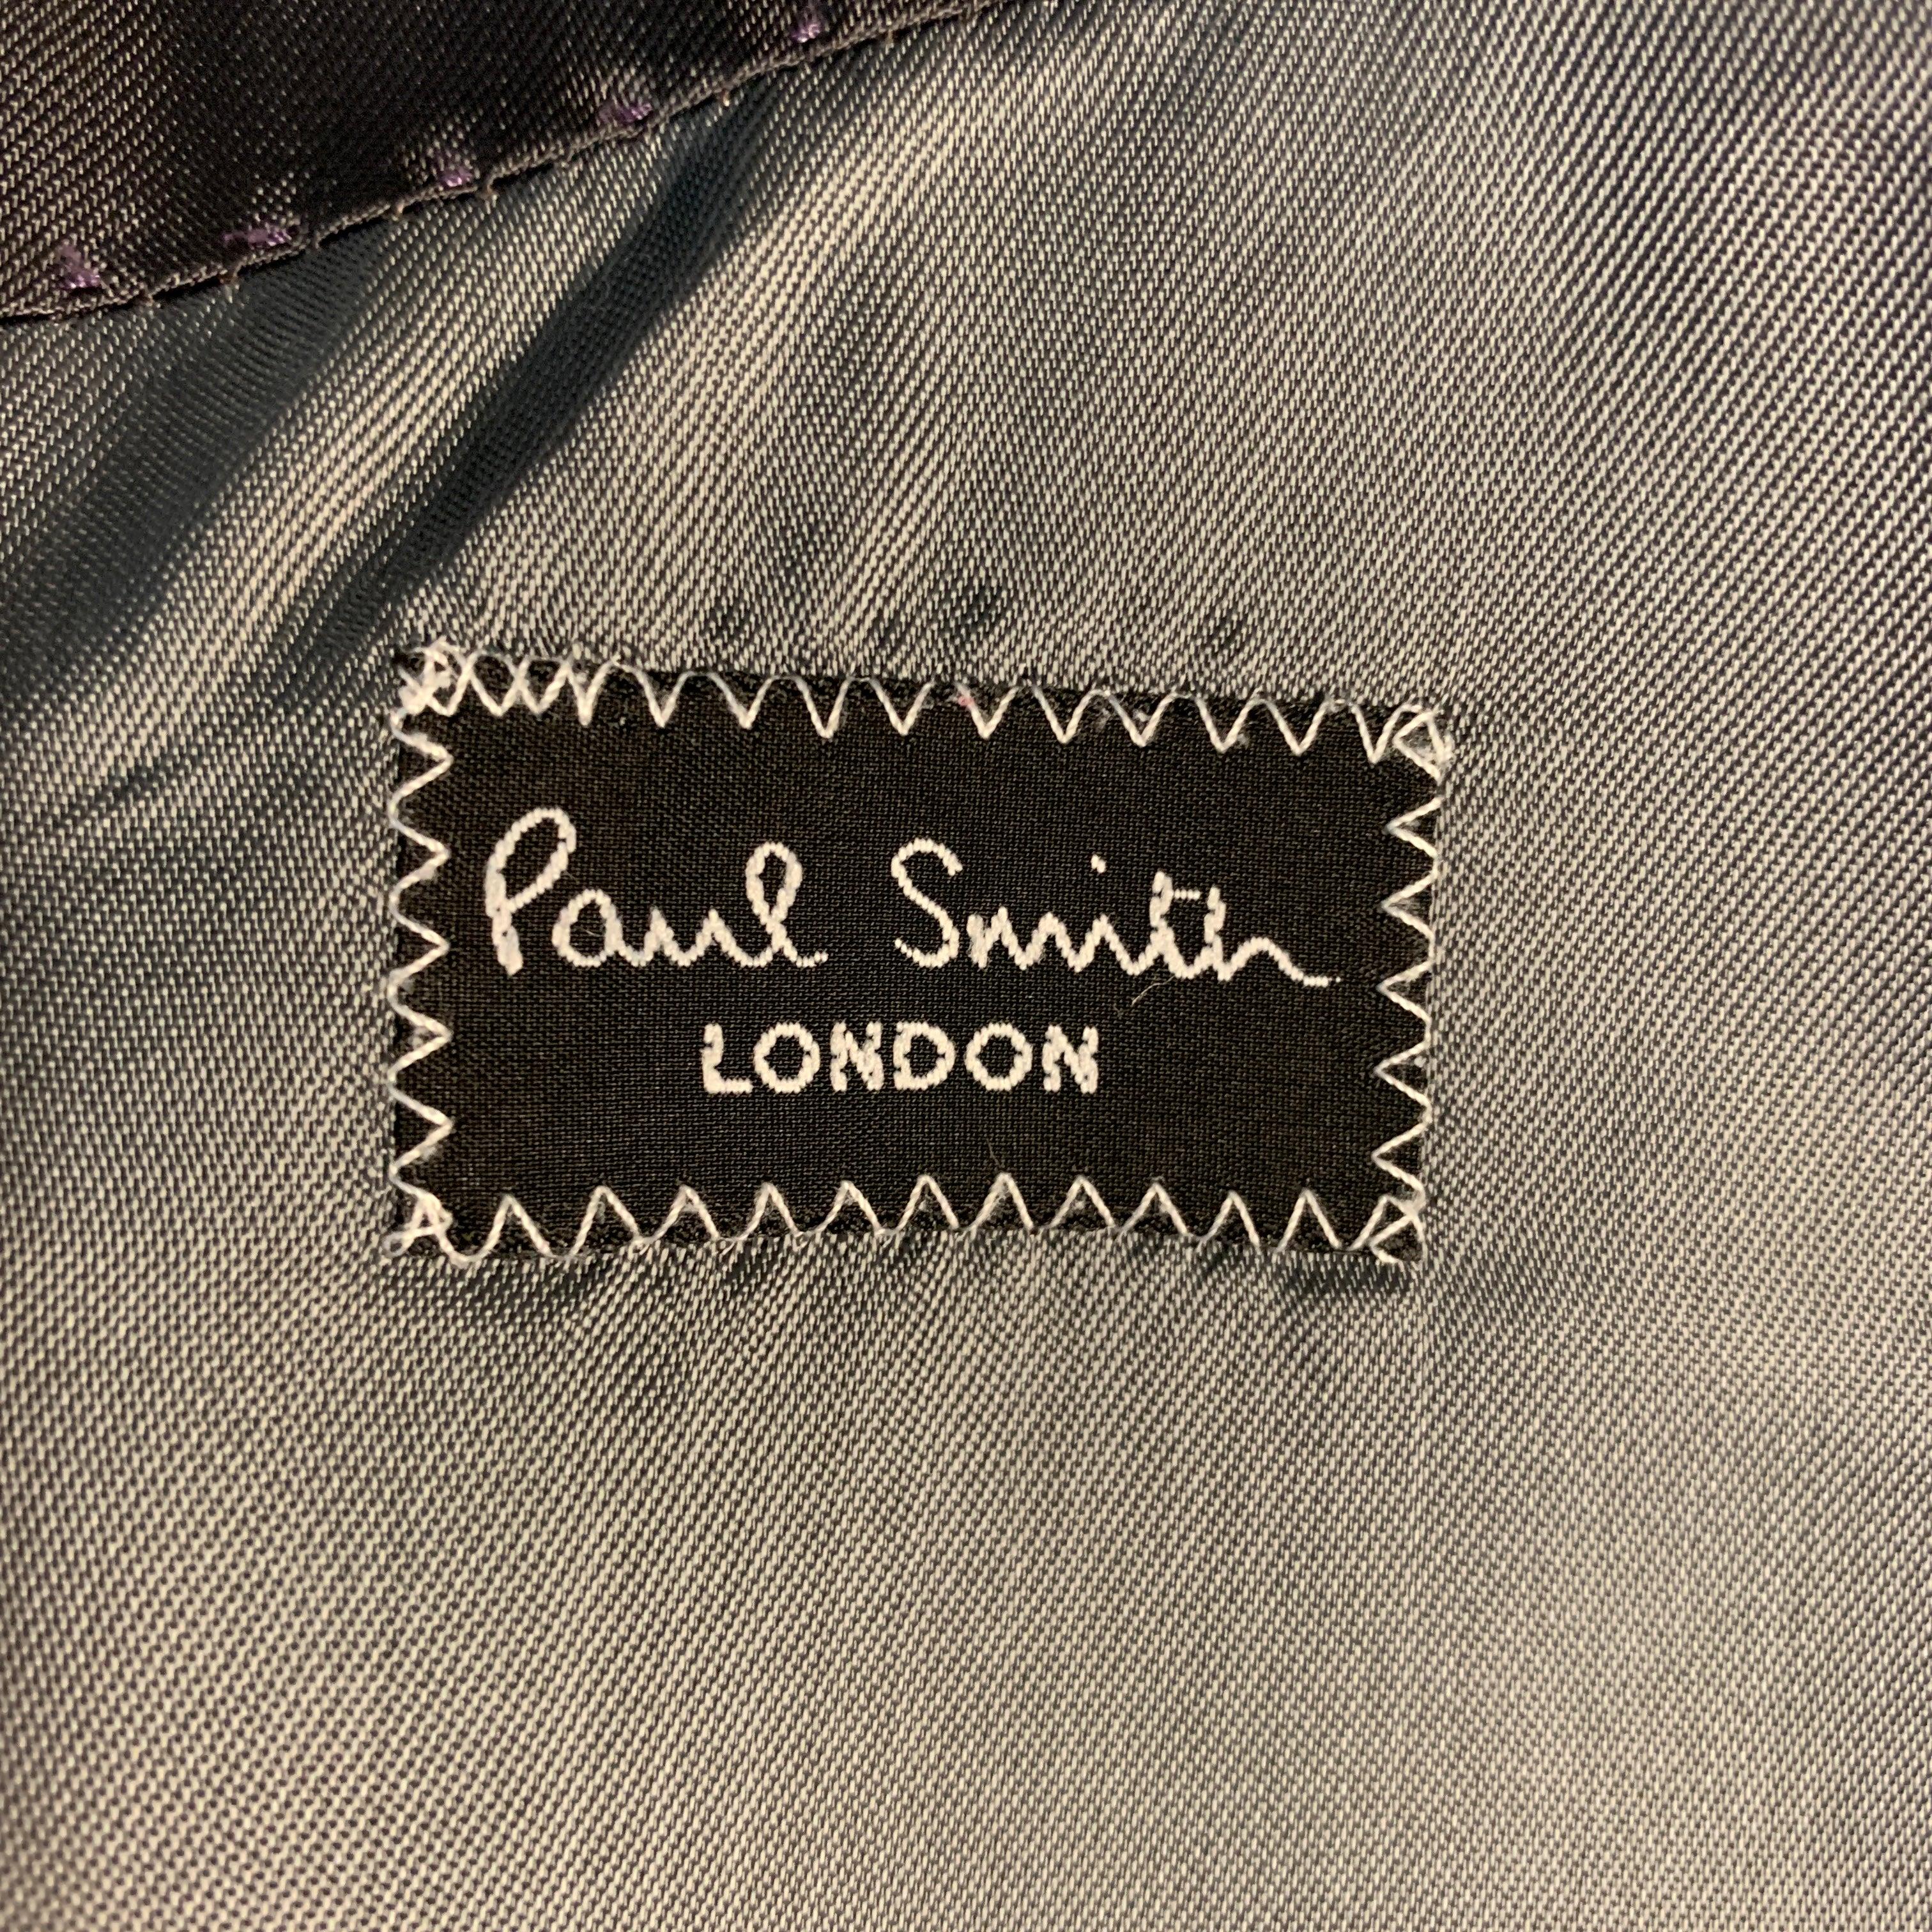 PAUL SMITH Size 44 Black Wool / Cashmere Notch Lapel Stitches Sport Coat For Sale 6